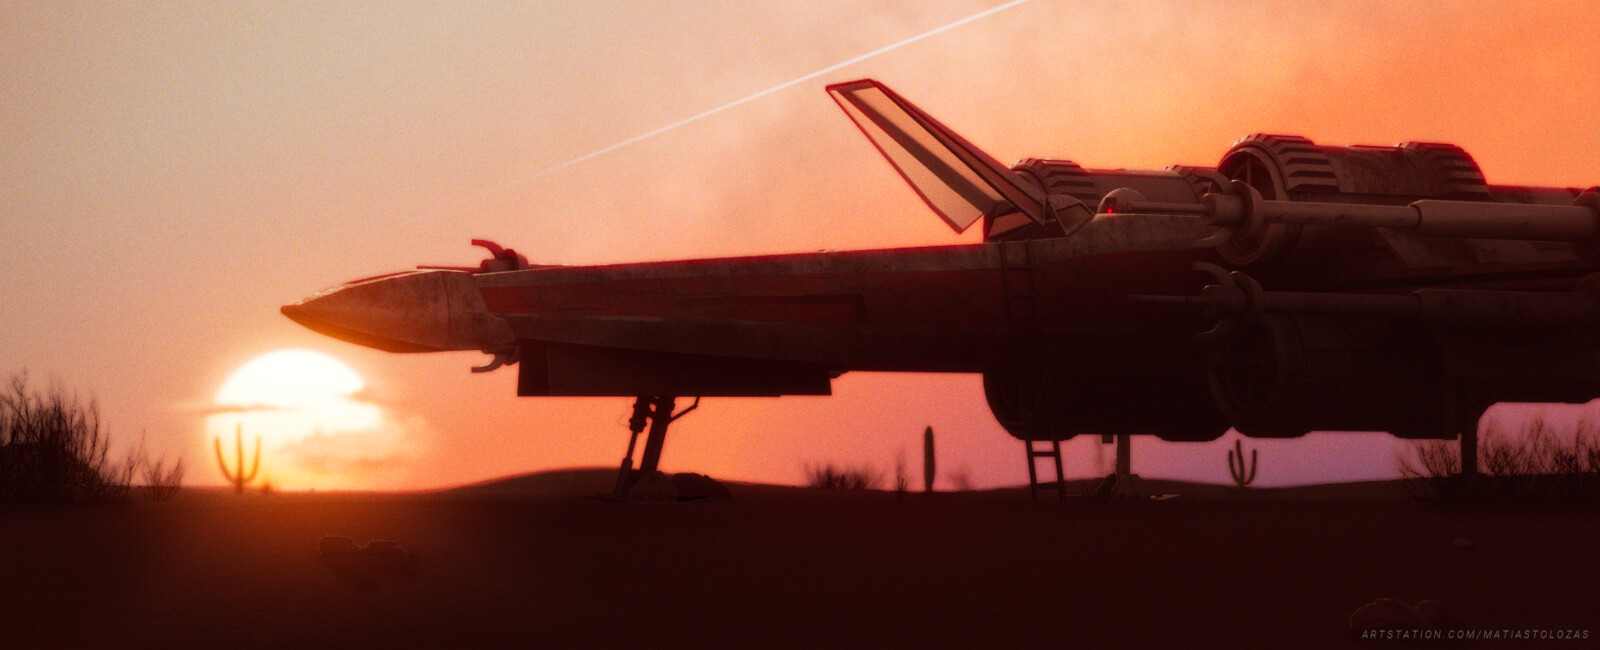 X-Wing Sunset 